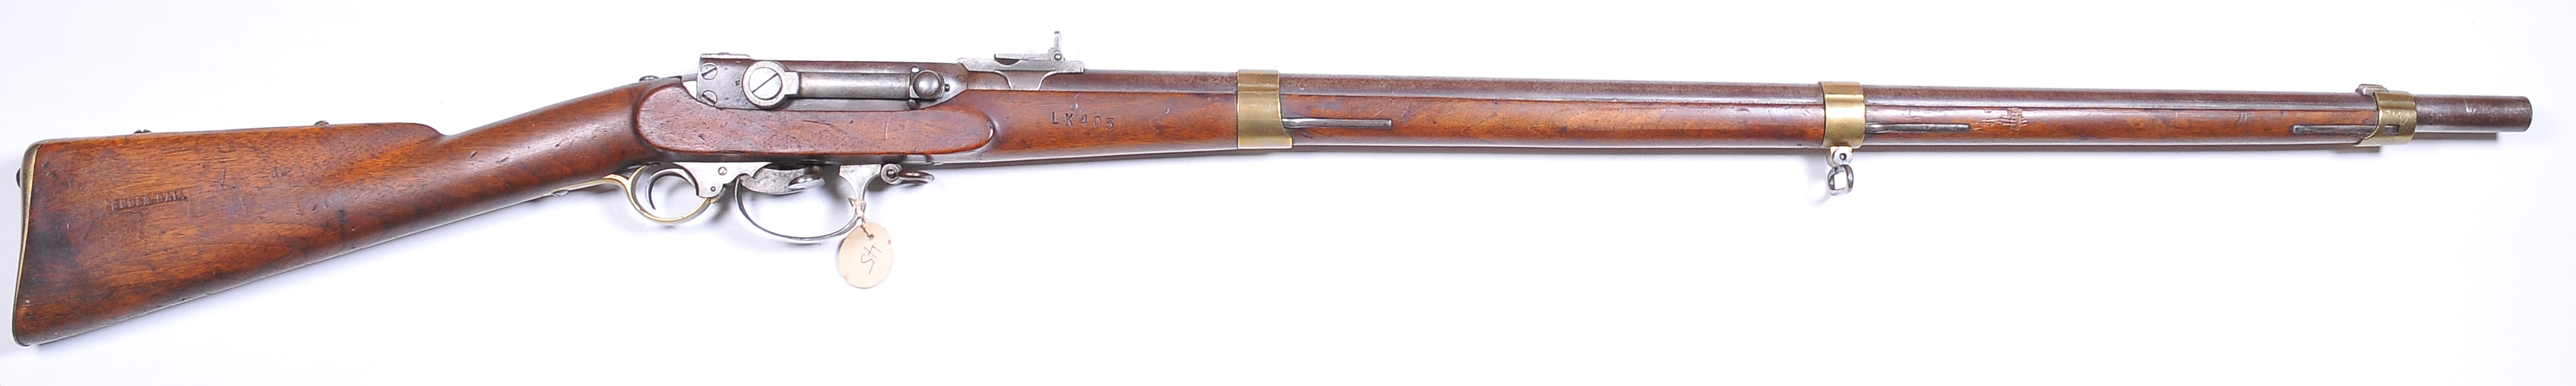 ./guns/rifle/bilder/Rifle-Herzberg-Kammerlader-M1846-55-1349-1.jpg